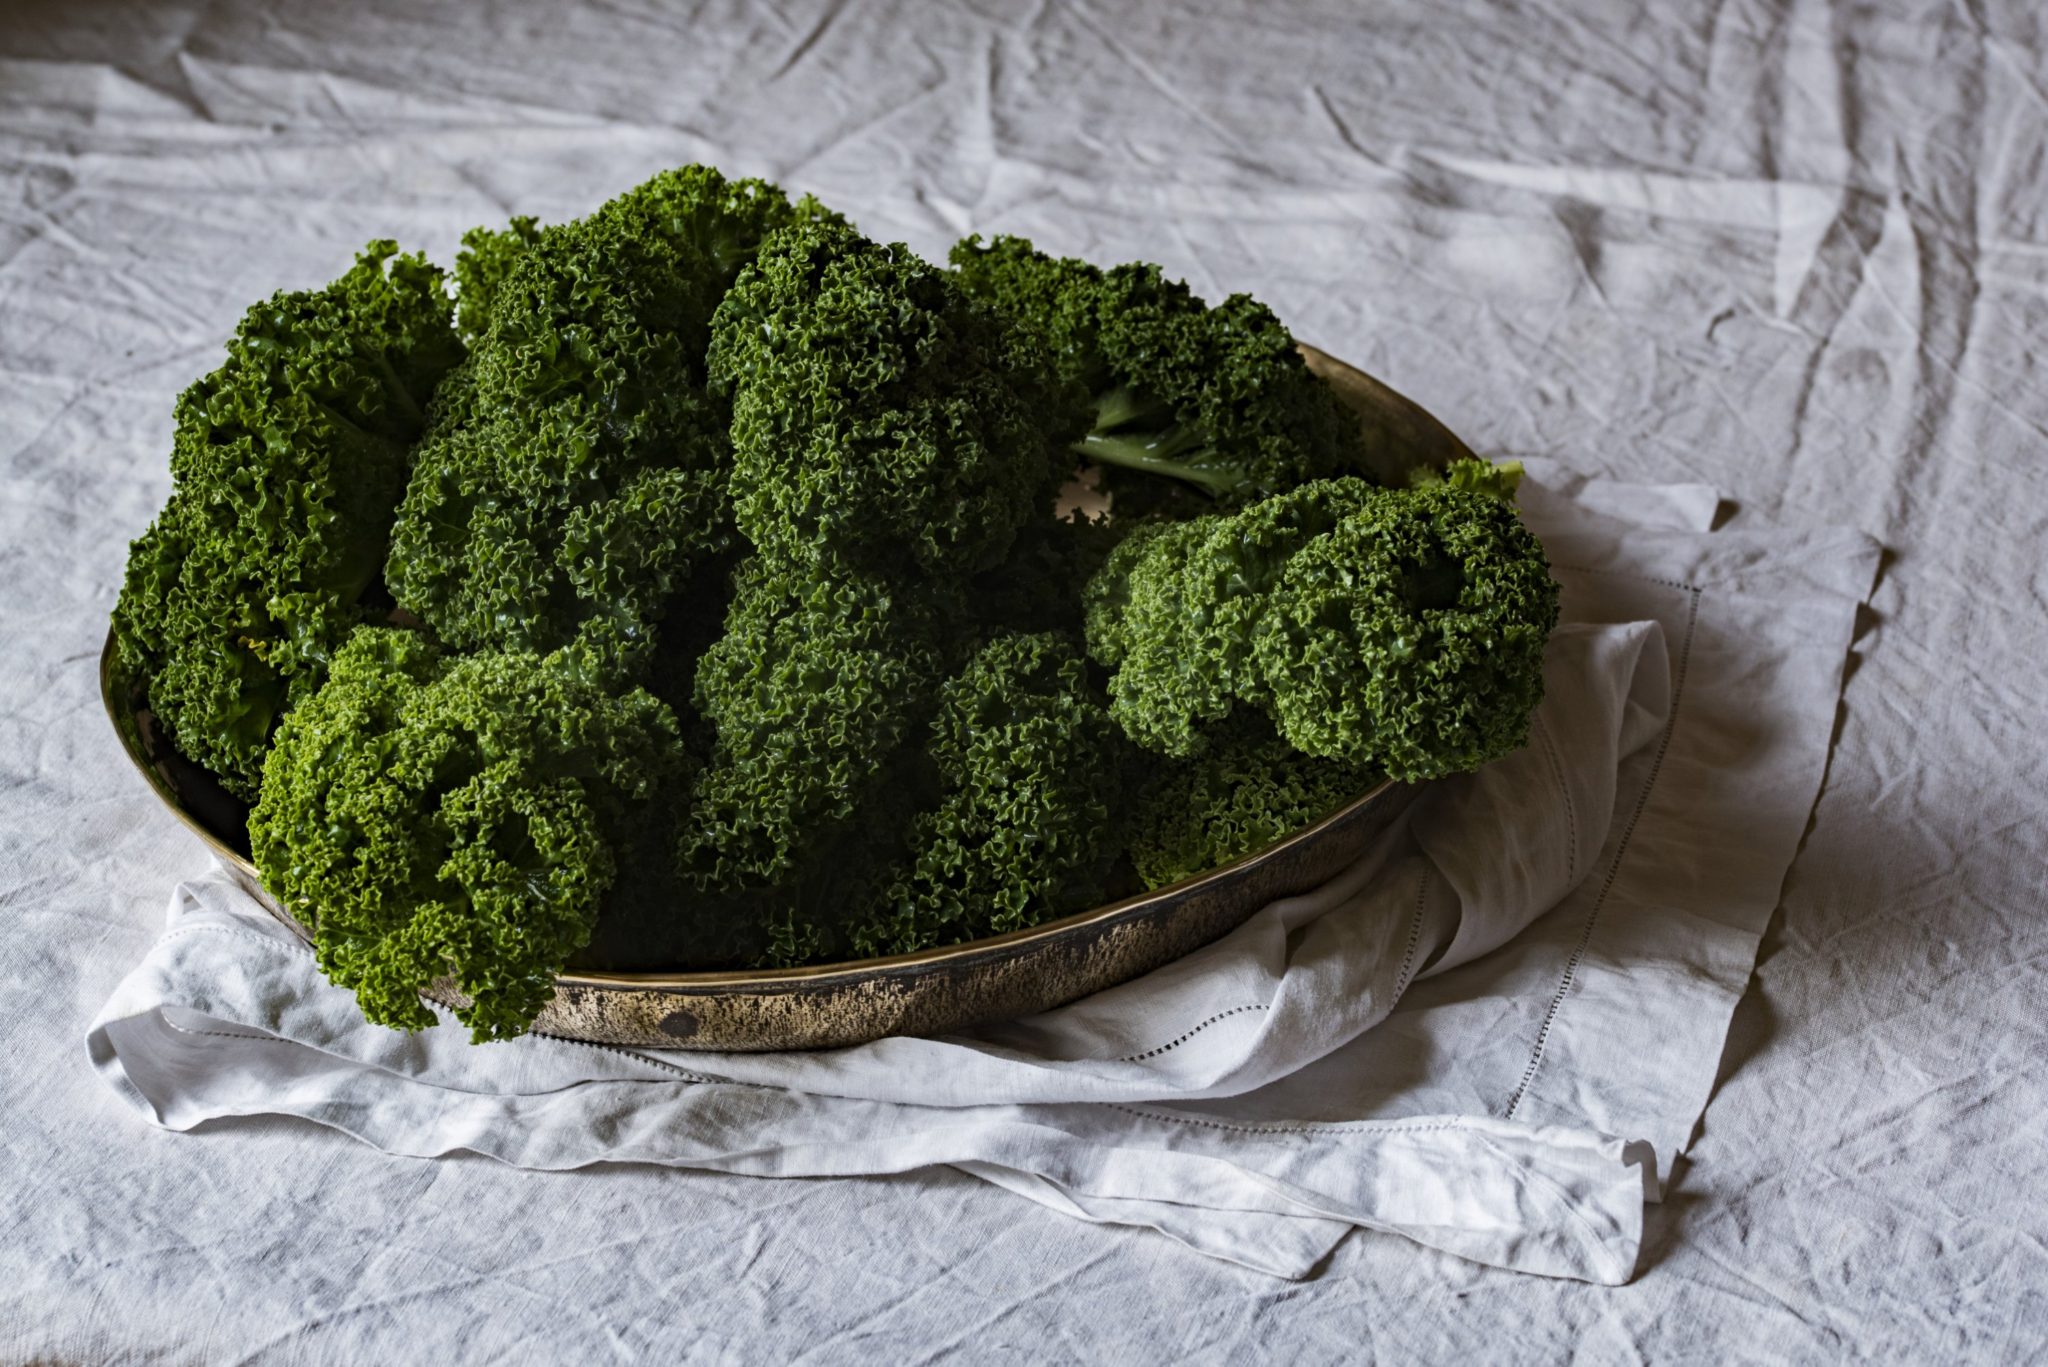 Eat magnesium rich broccoli